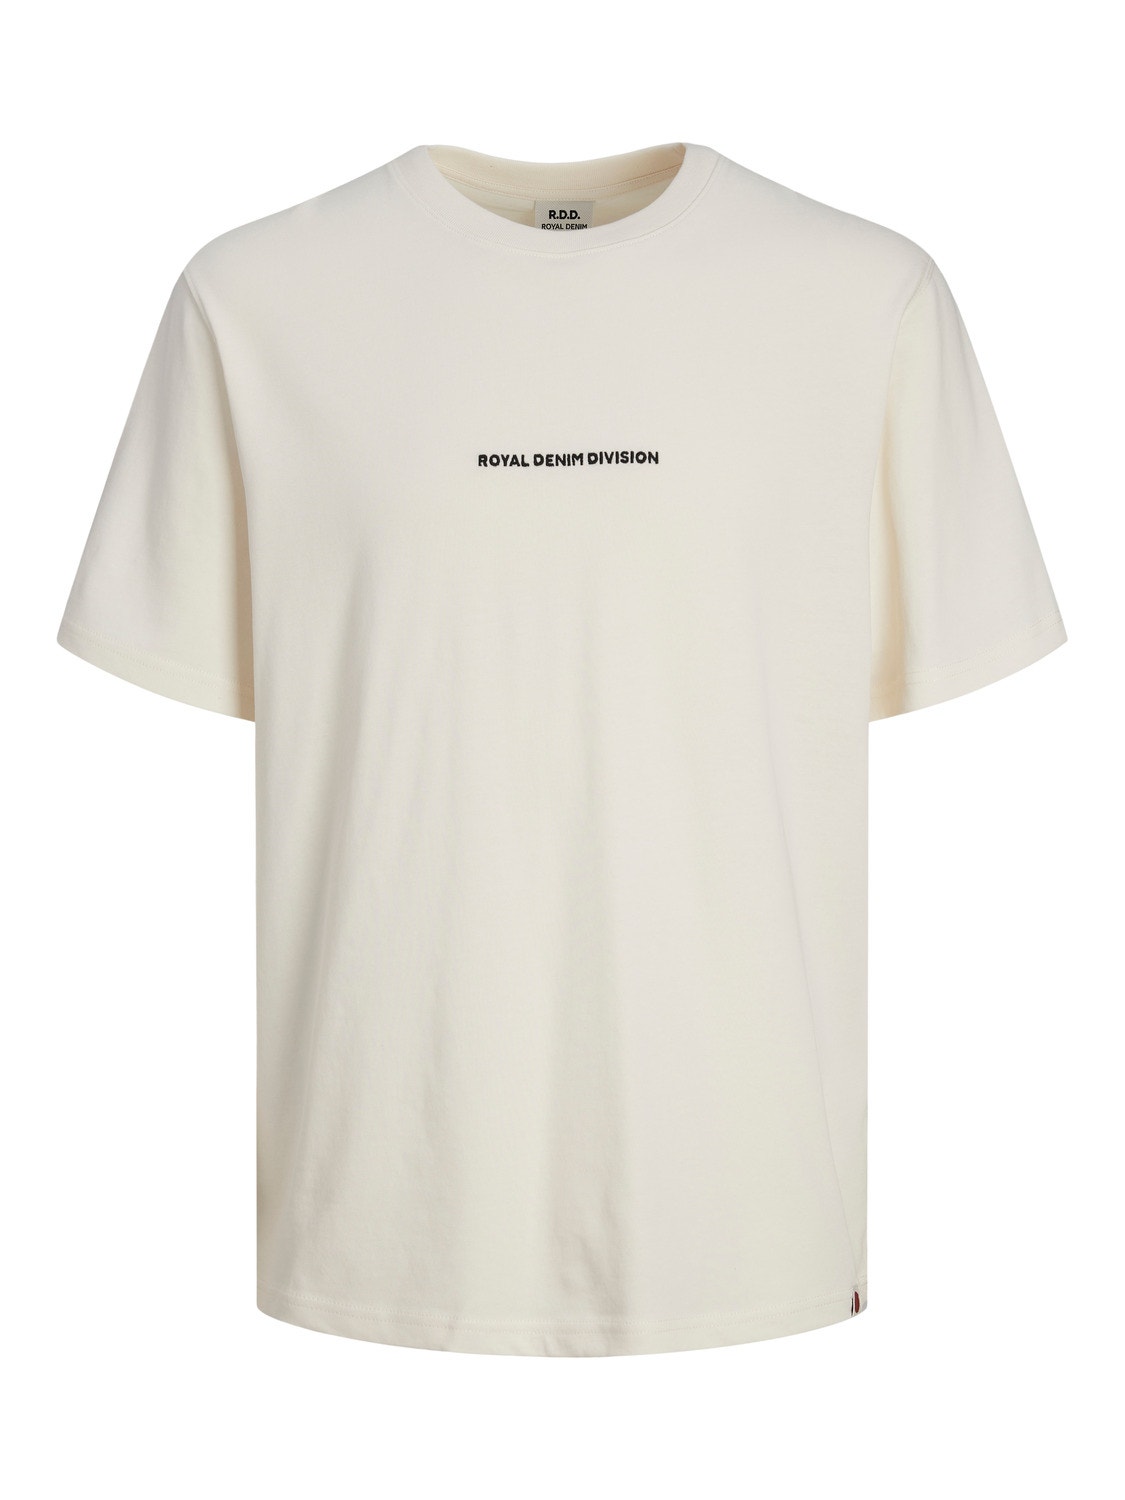 Jack & Jones RDD Printed Crew neck T-shirt -Egret - 12253392